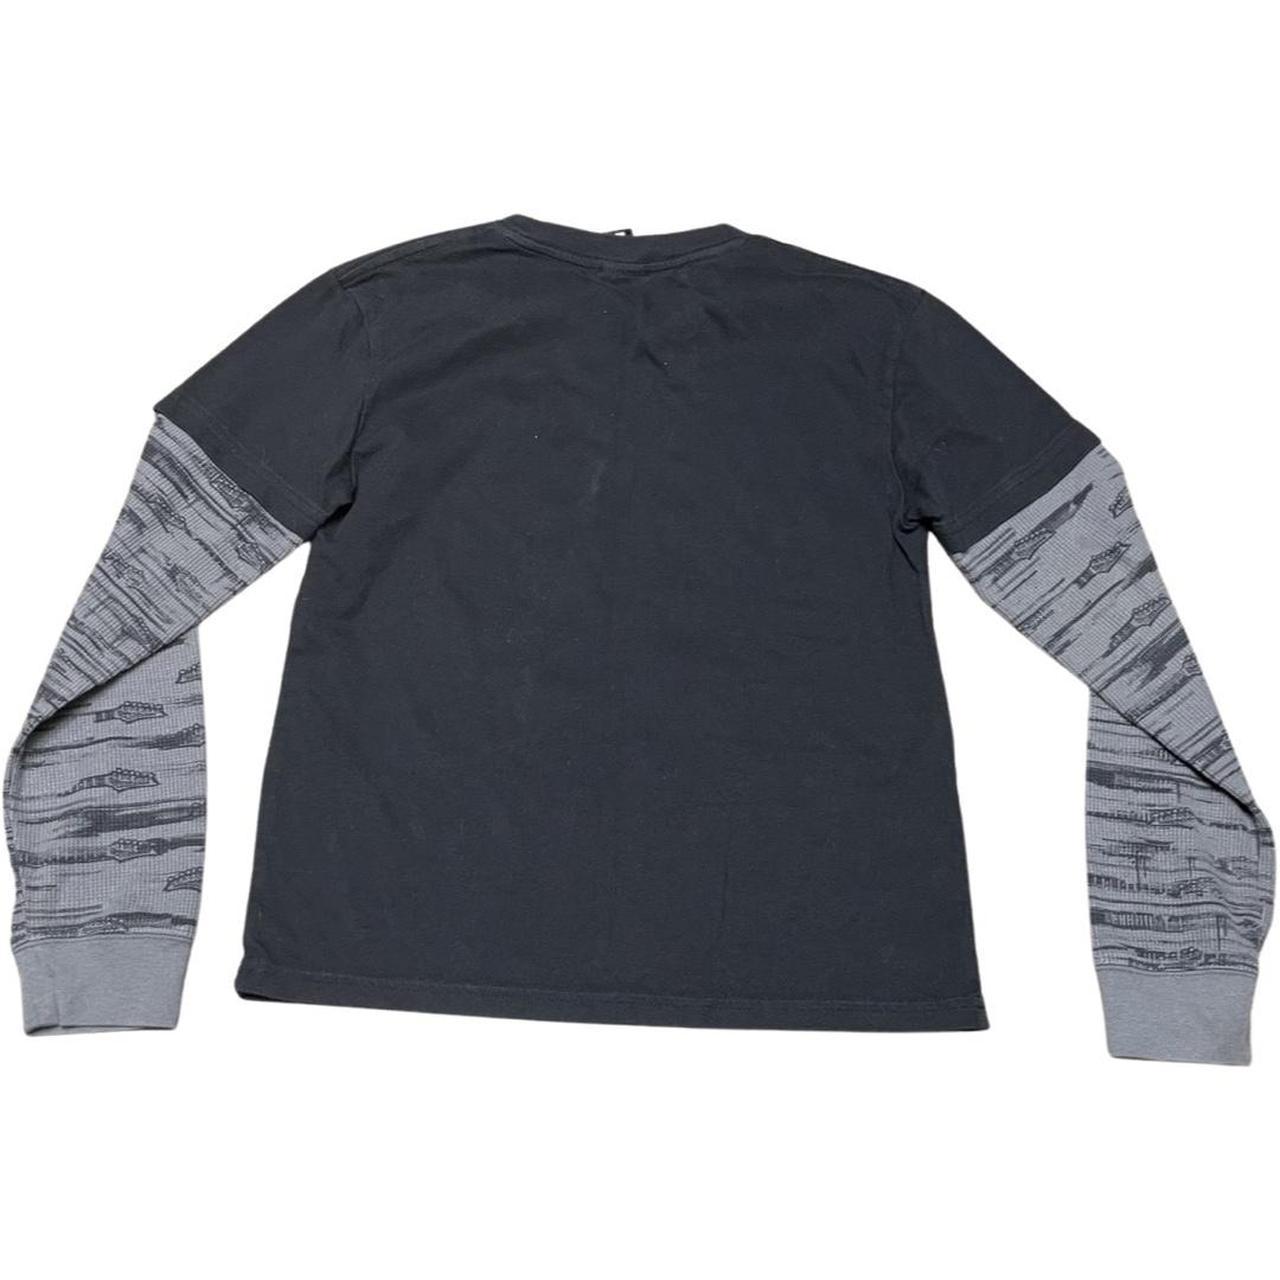 Hybrid Apparel Black and Grey Shirt (3)